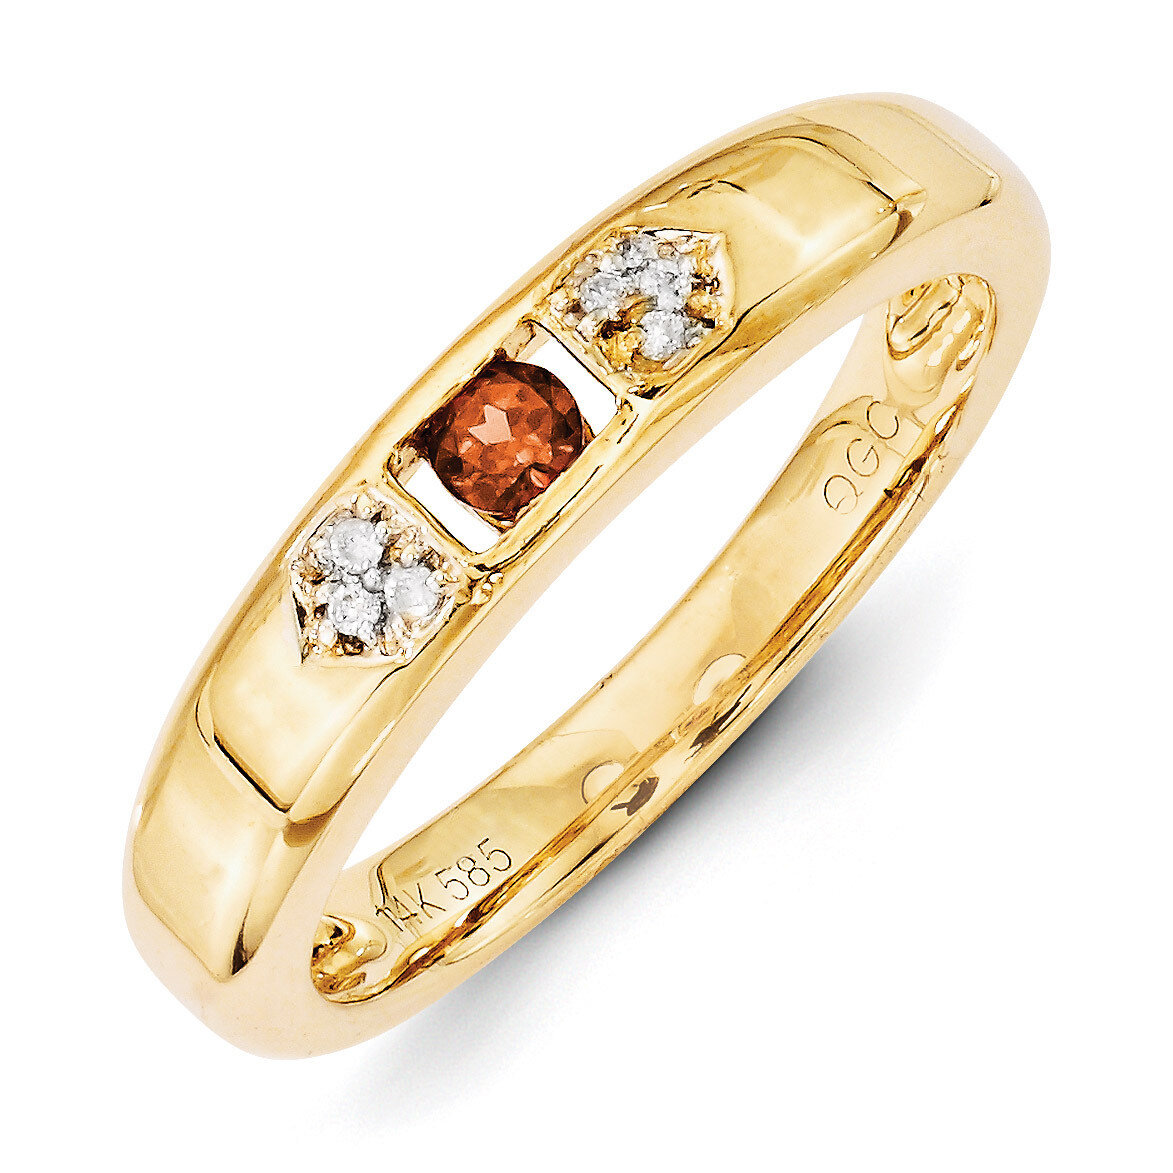 1 Birthstone Family Jewelry Diamond Semi-Set Ring 14k Yellow Gold XMR48/1